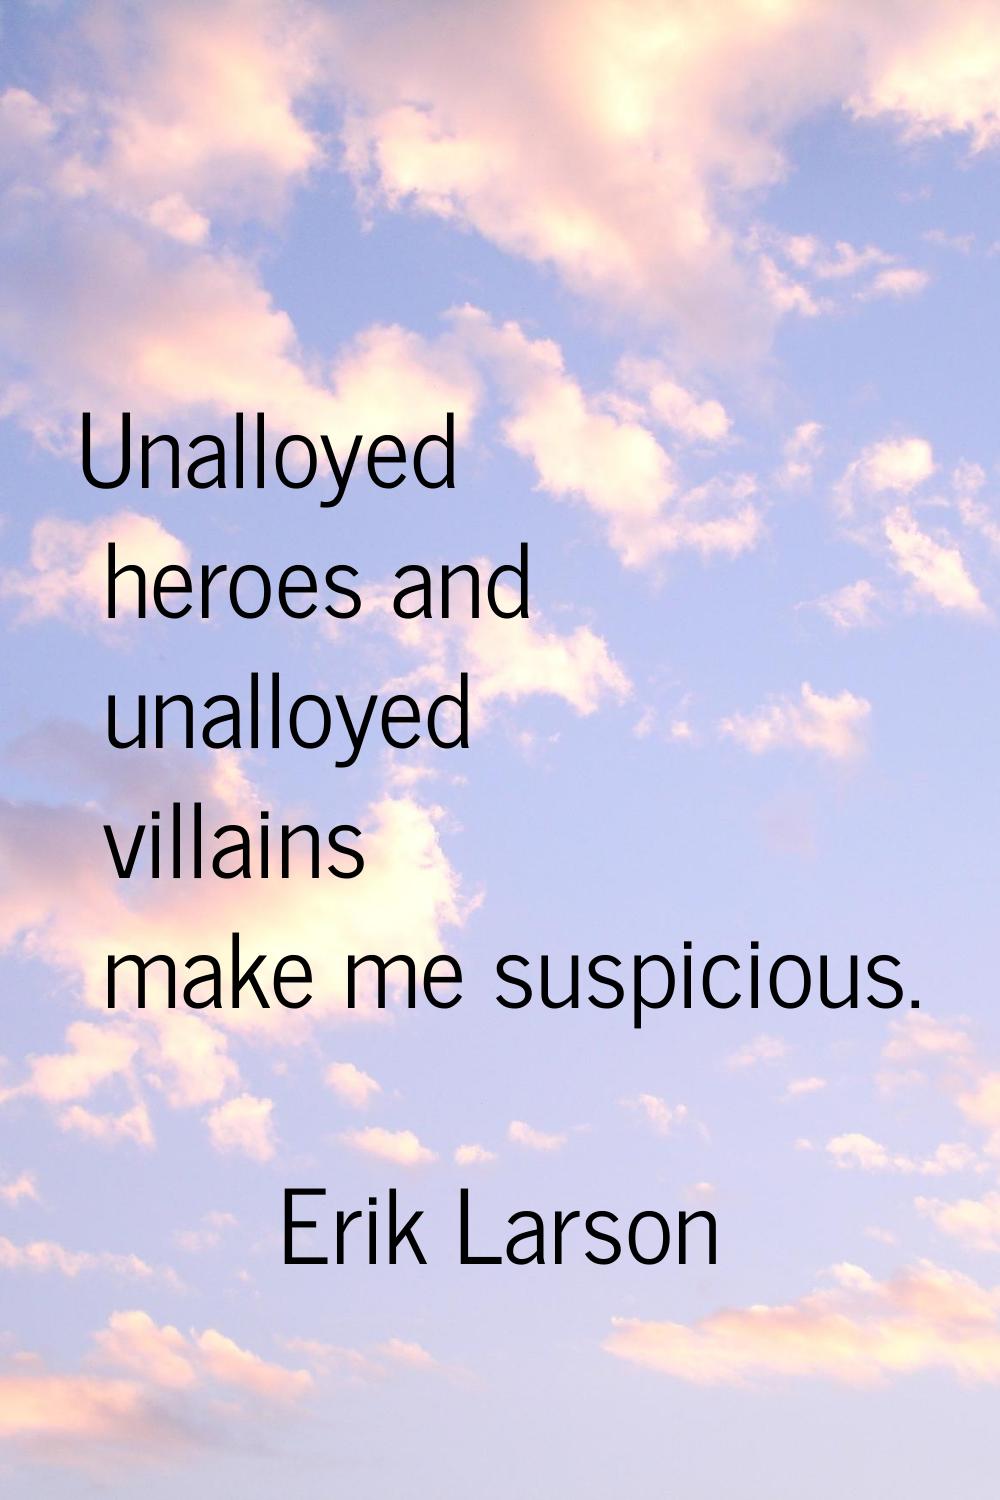 Unalloyed heroes and unalloyed villains make me suspicious.